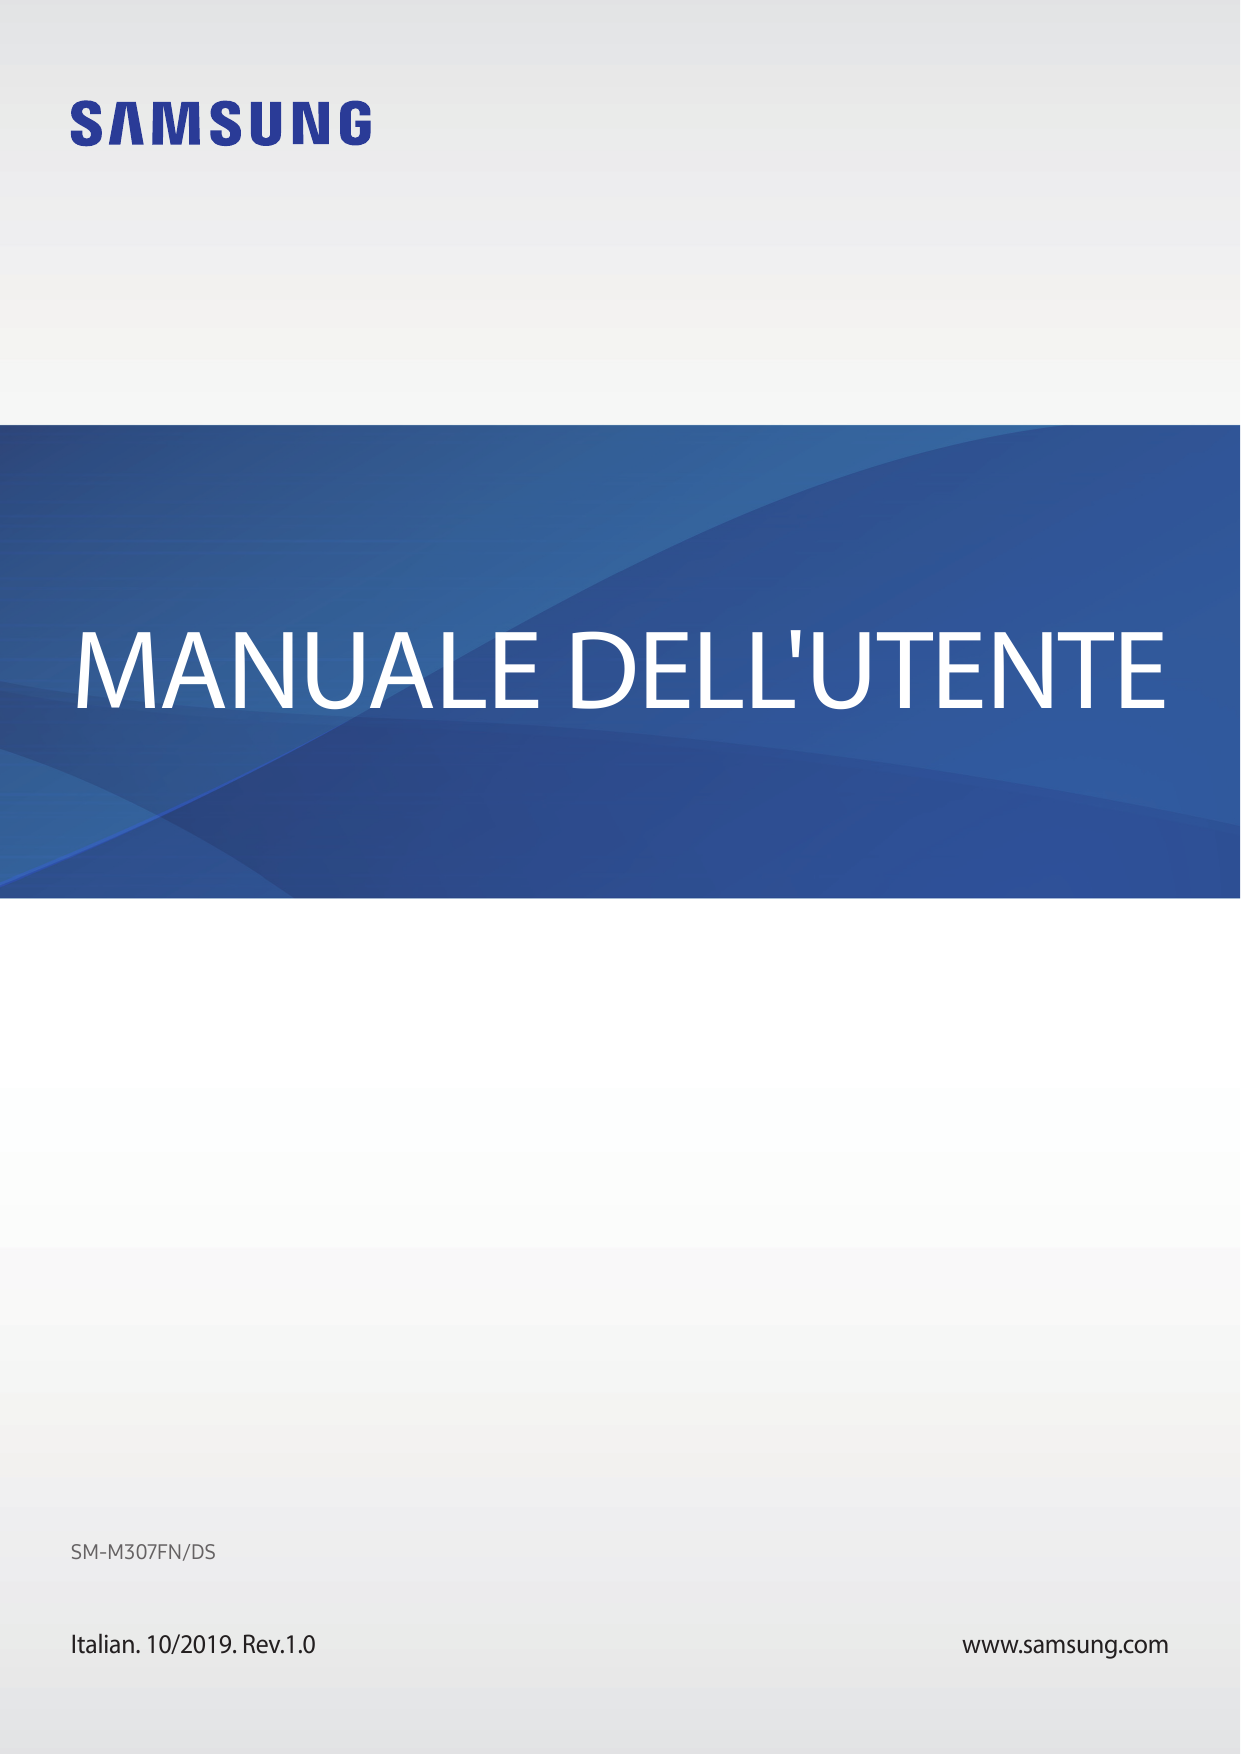 MANUALE DELL'UTENTESM-M307FN/DSItalian. 10/2019. Rev.1.0www.samsung.com